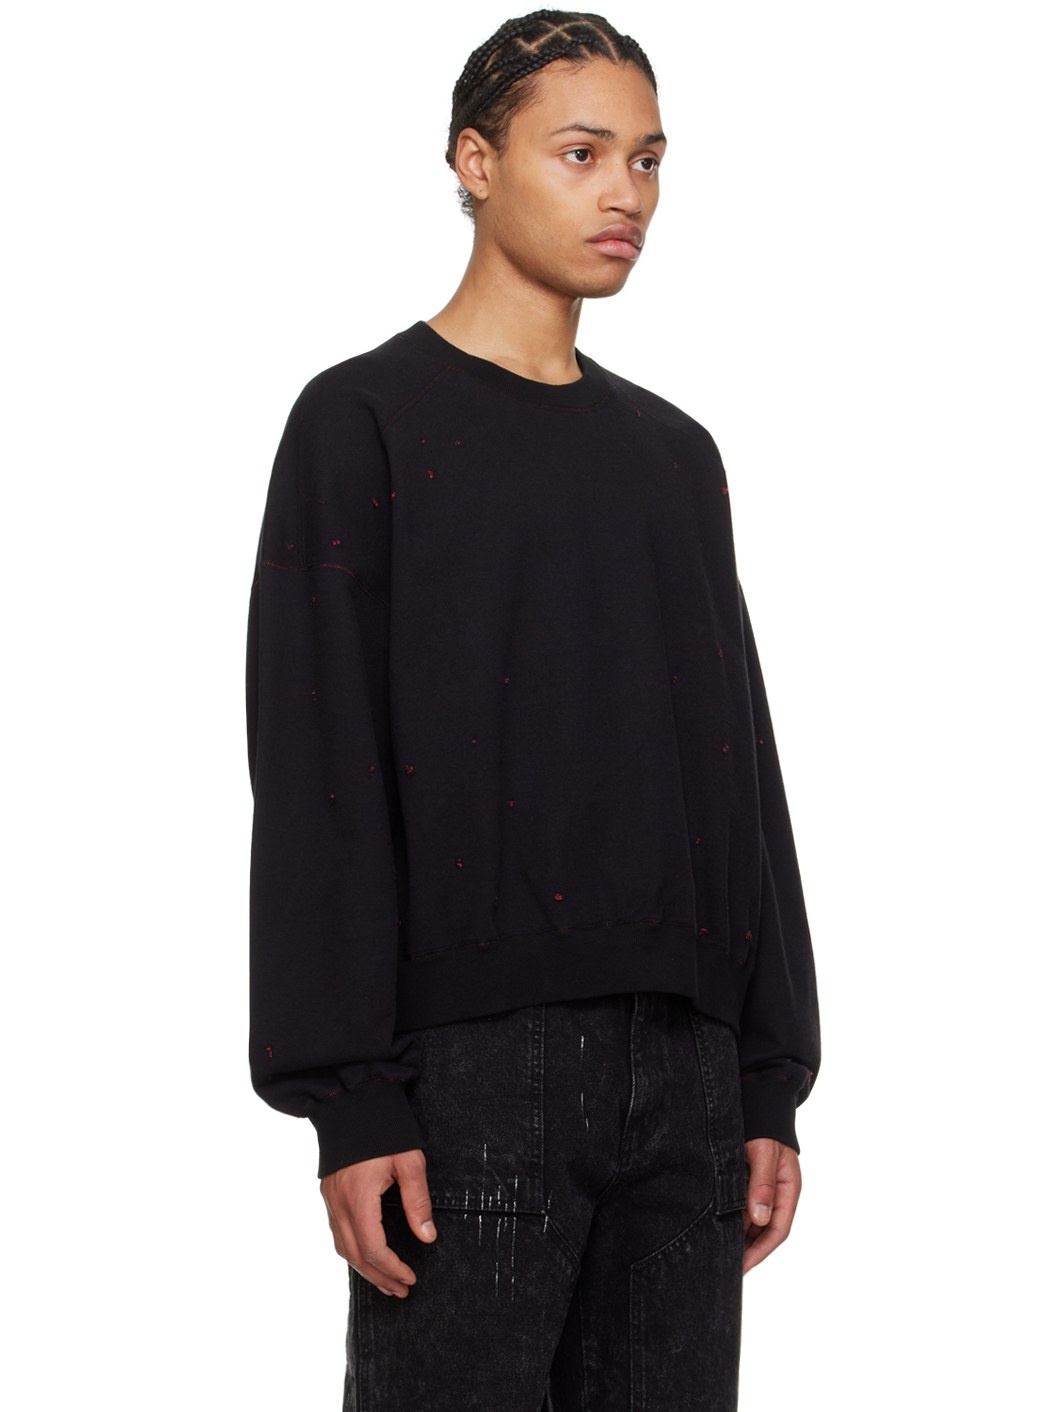 Black Distressed Sweatshirt - 2